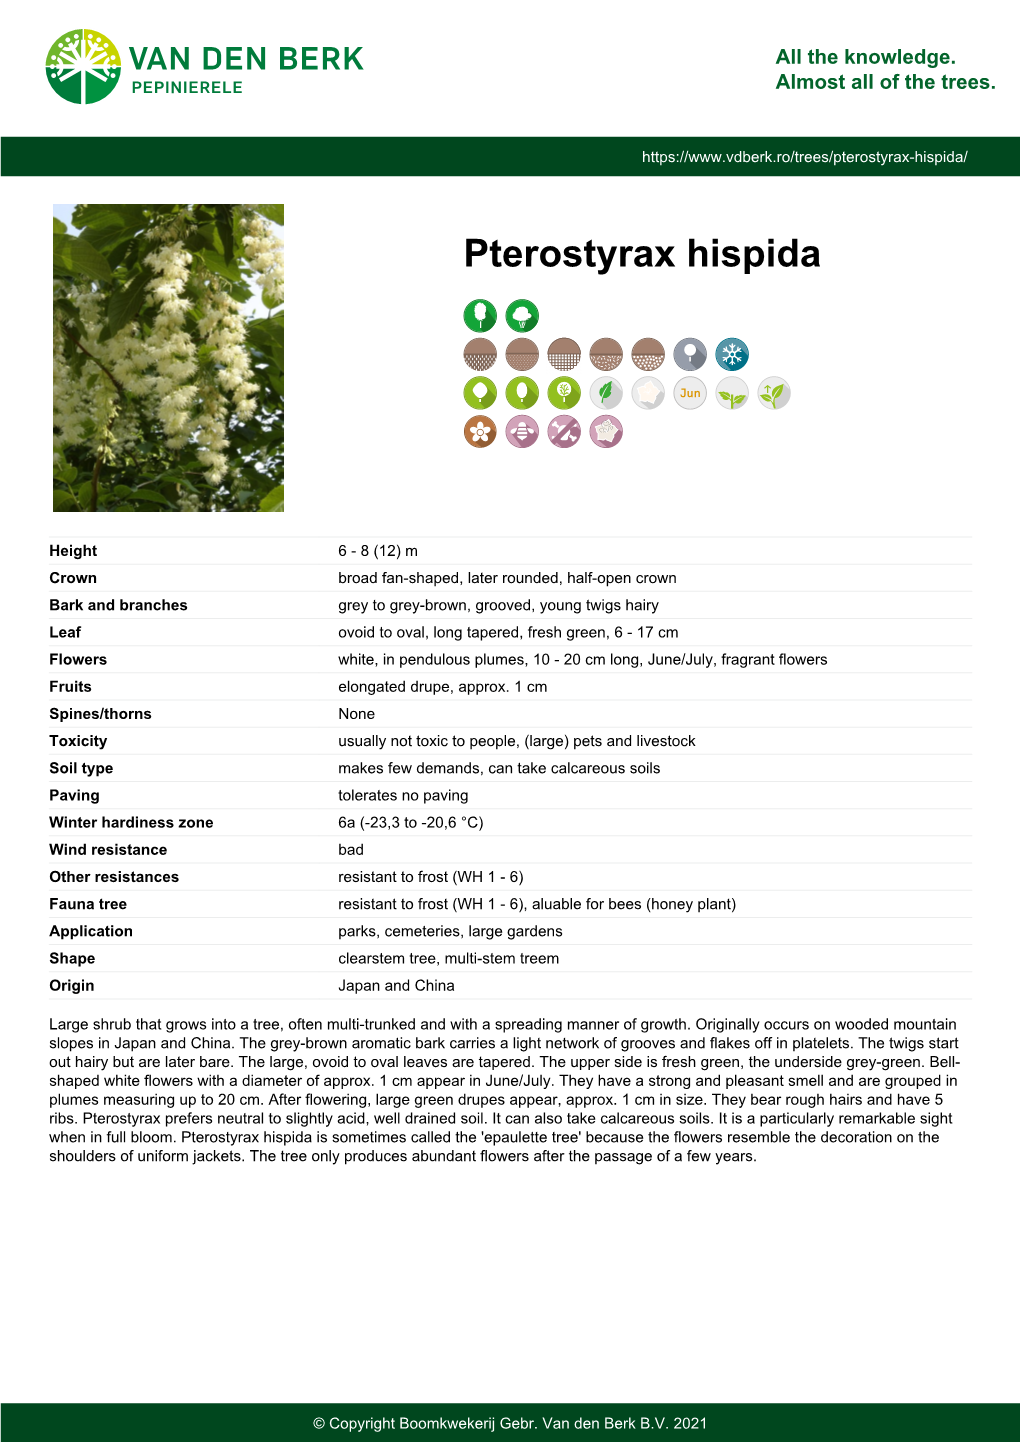 Pterostyrax Hispida